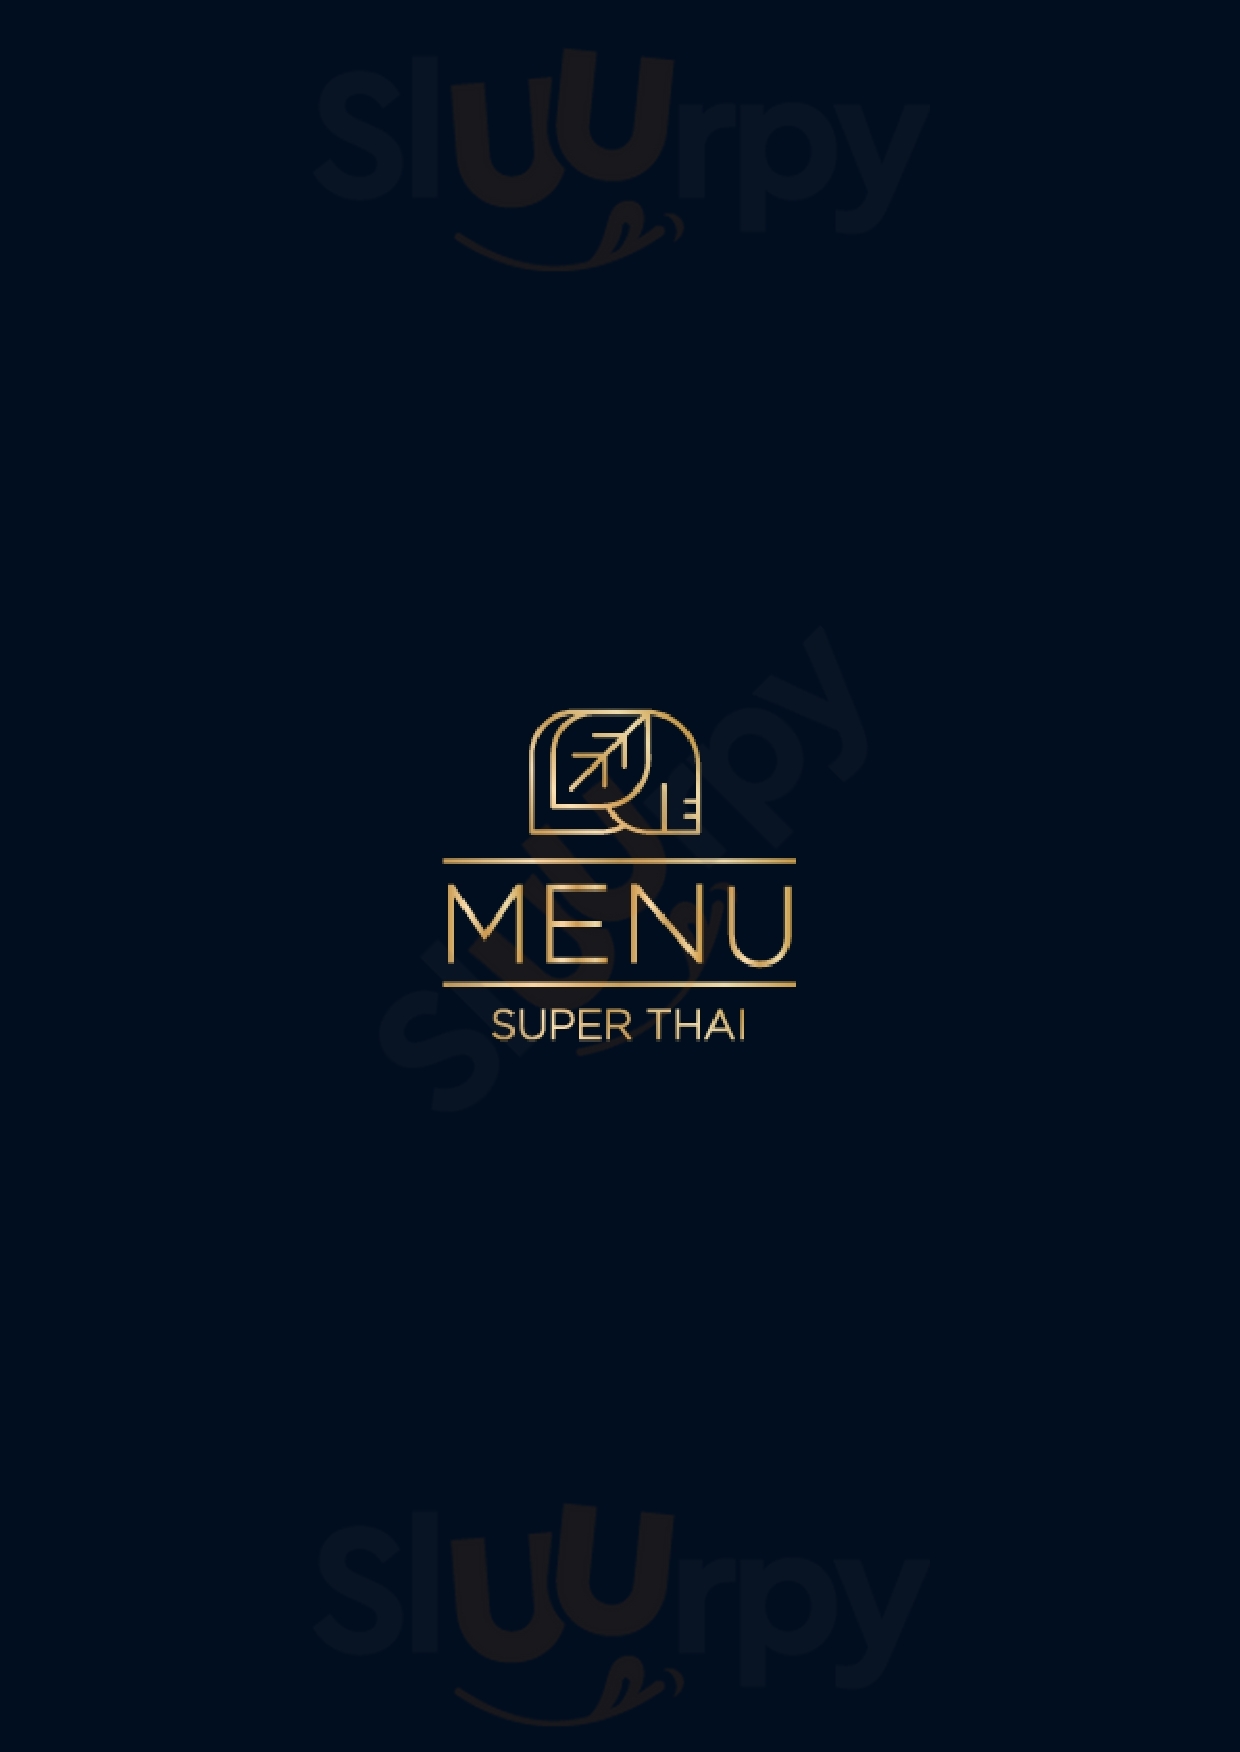 Super Thai By Soi Aroy Singapore Menu - 1